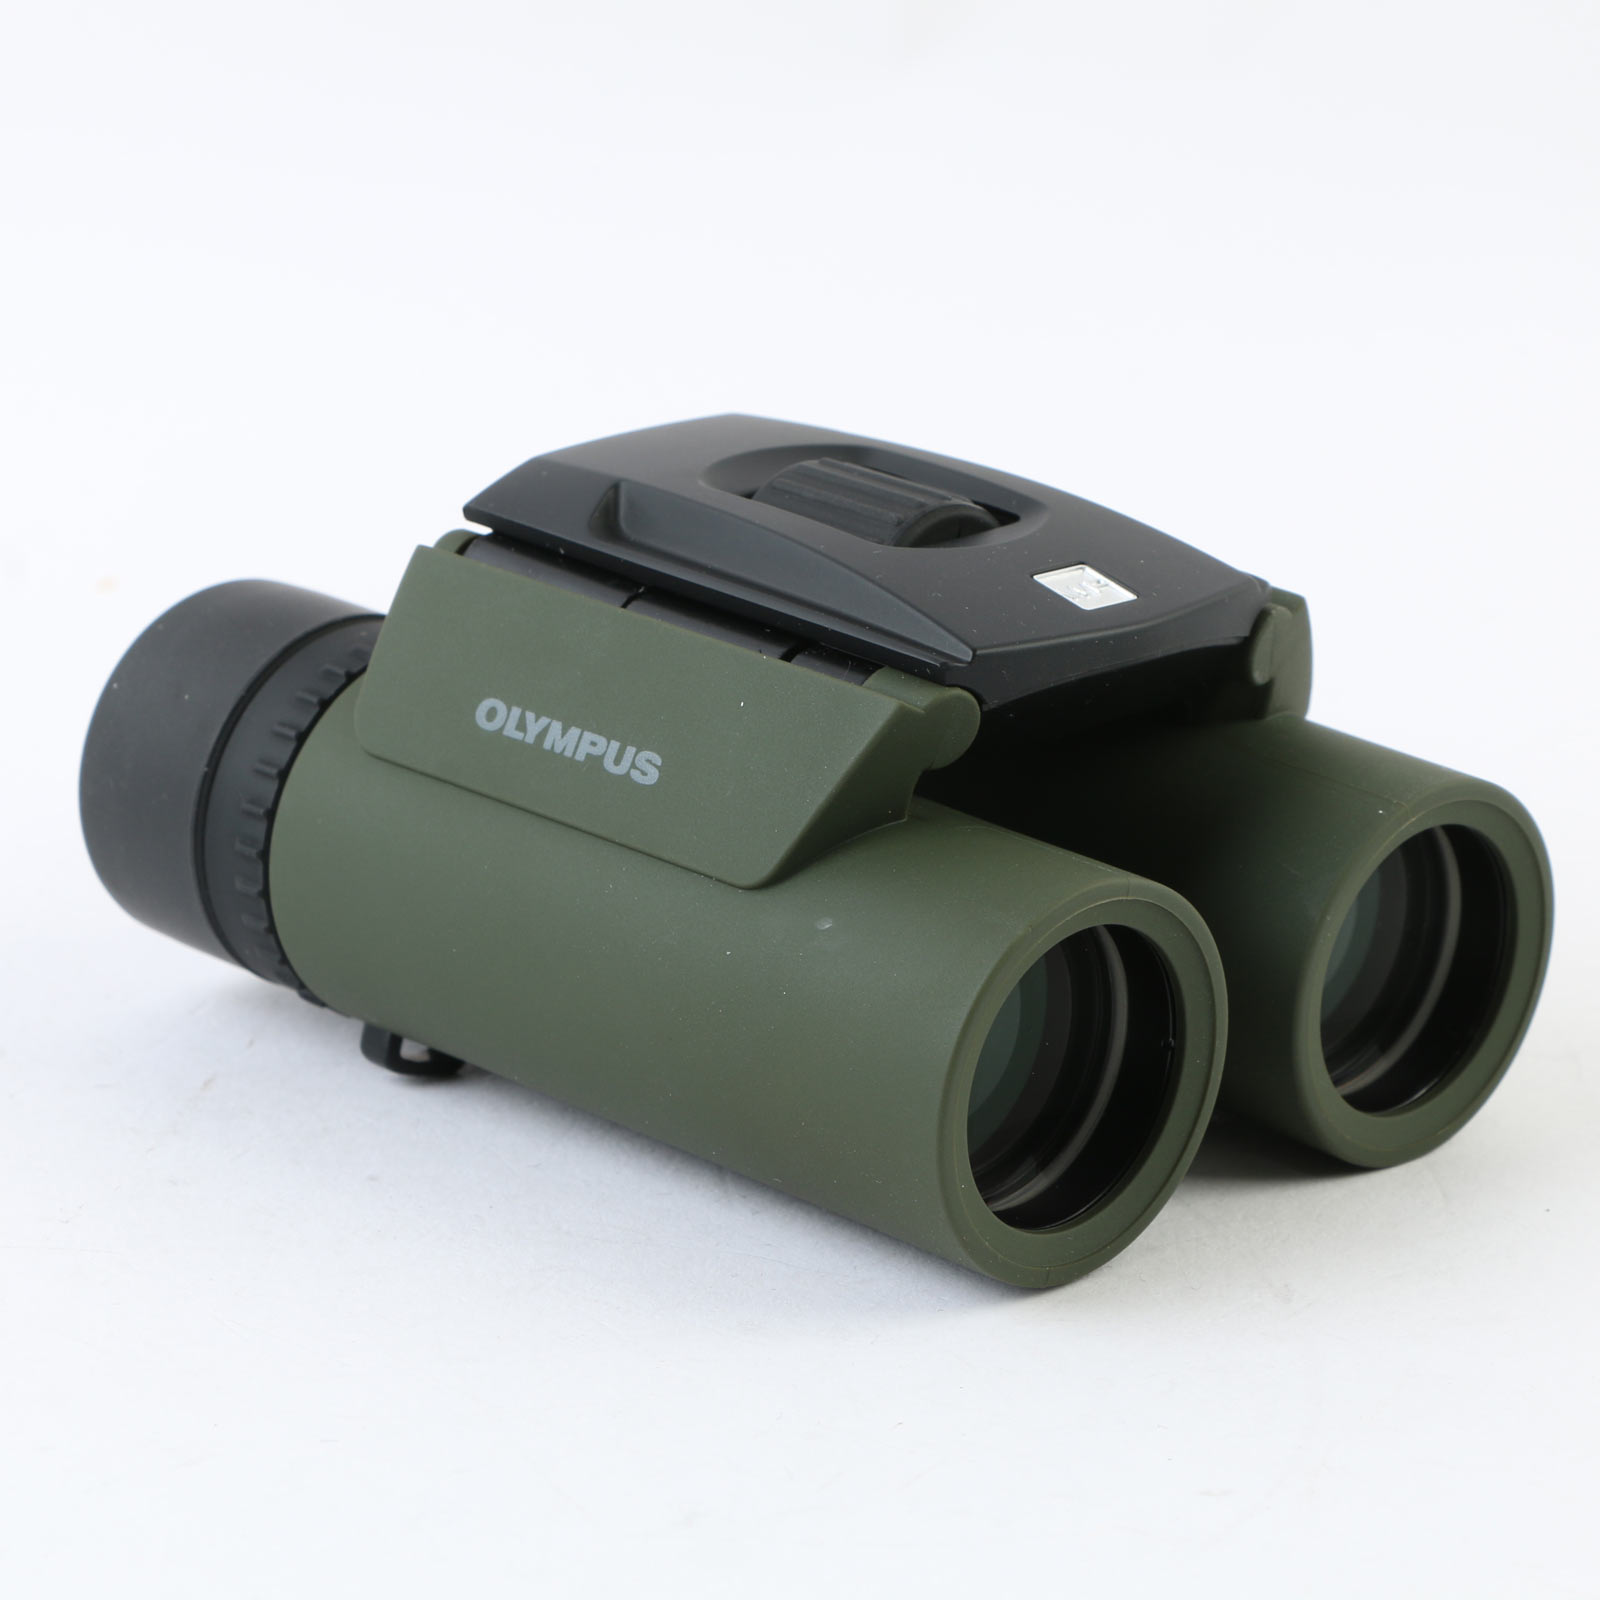 USED Olympus Sports 8x25 WP II Binoculars - Forest Green